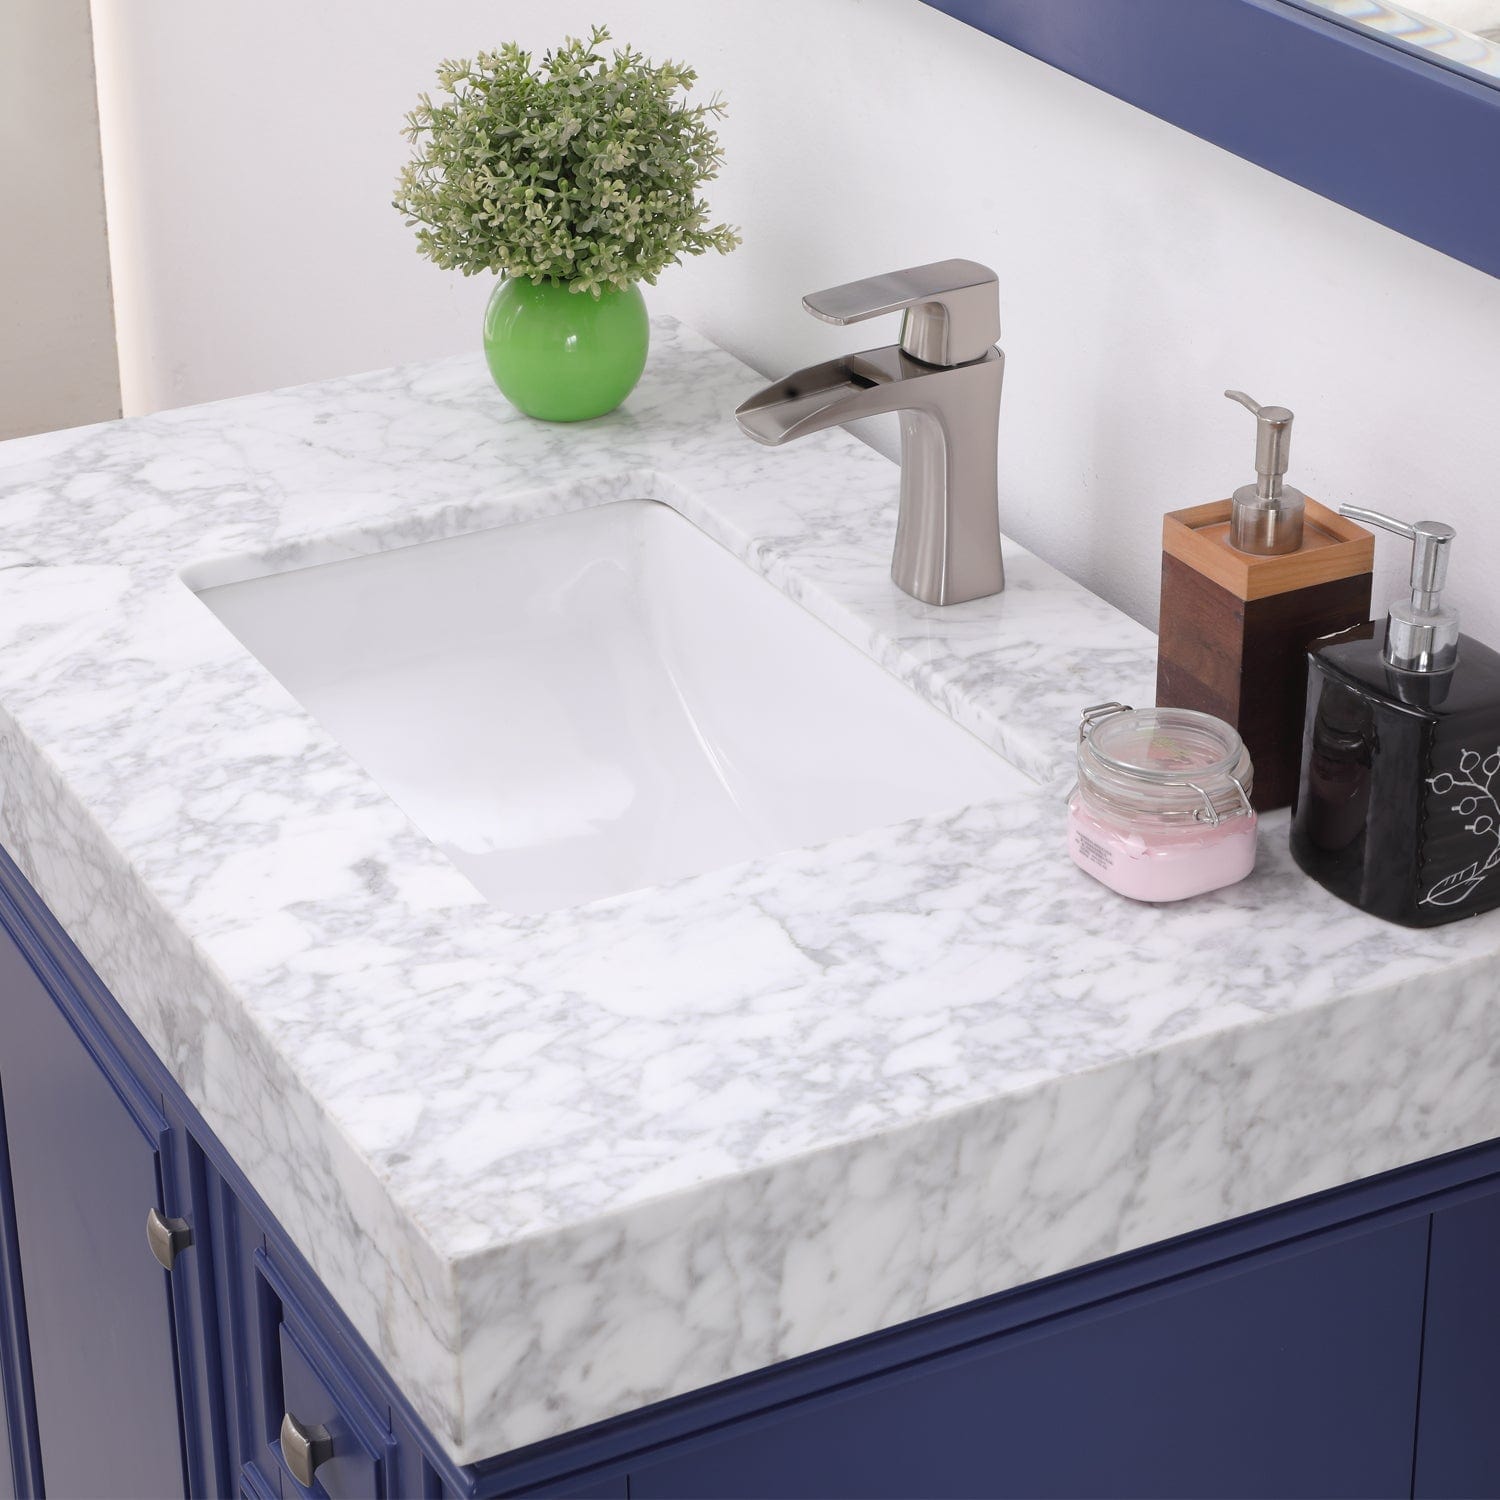 Altair Jardin 36" Single Bathroom Vanity Set in Jewelry Blue and Carrara White Marble Countertop with Mirror 539036-JB-CA - Molaix631112970952Vanity539036-JB-CA